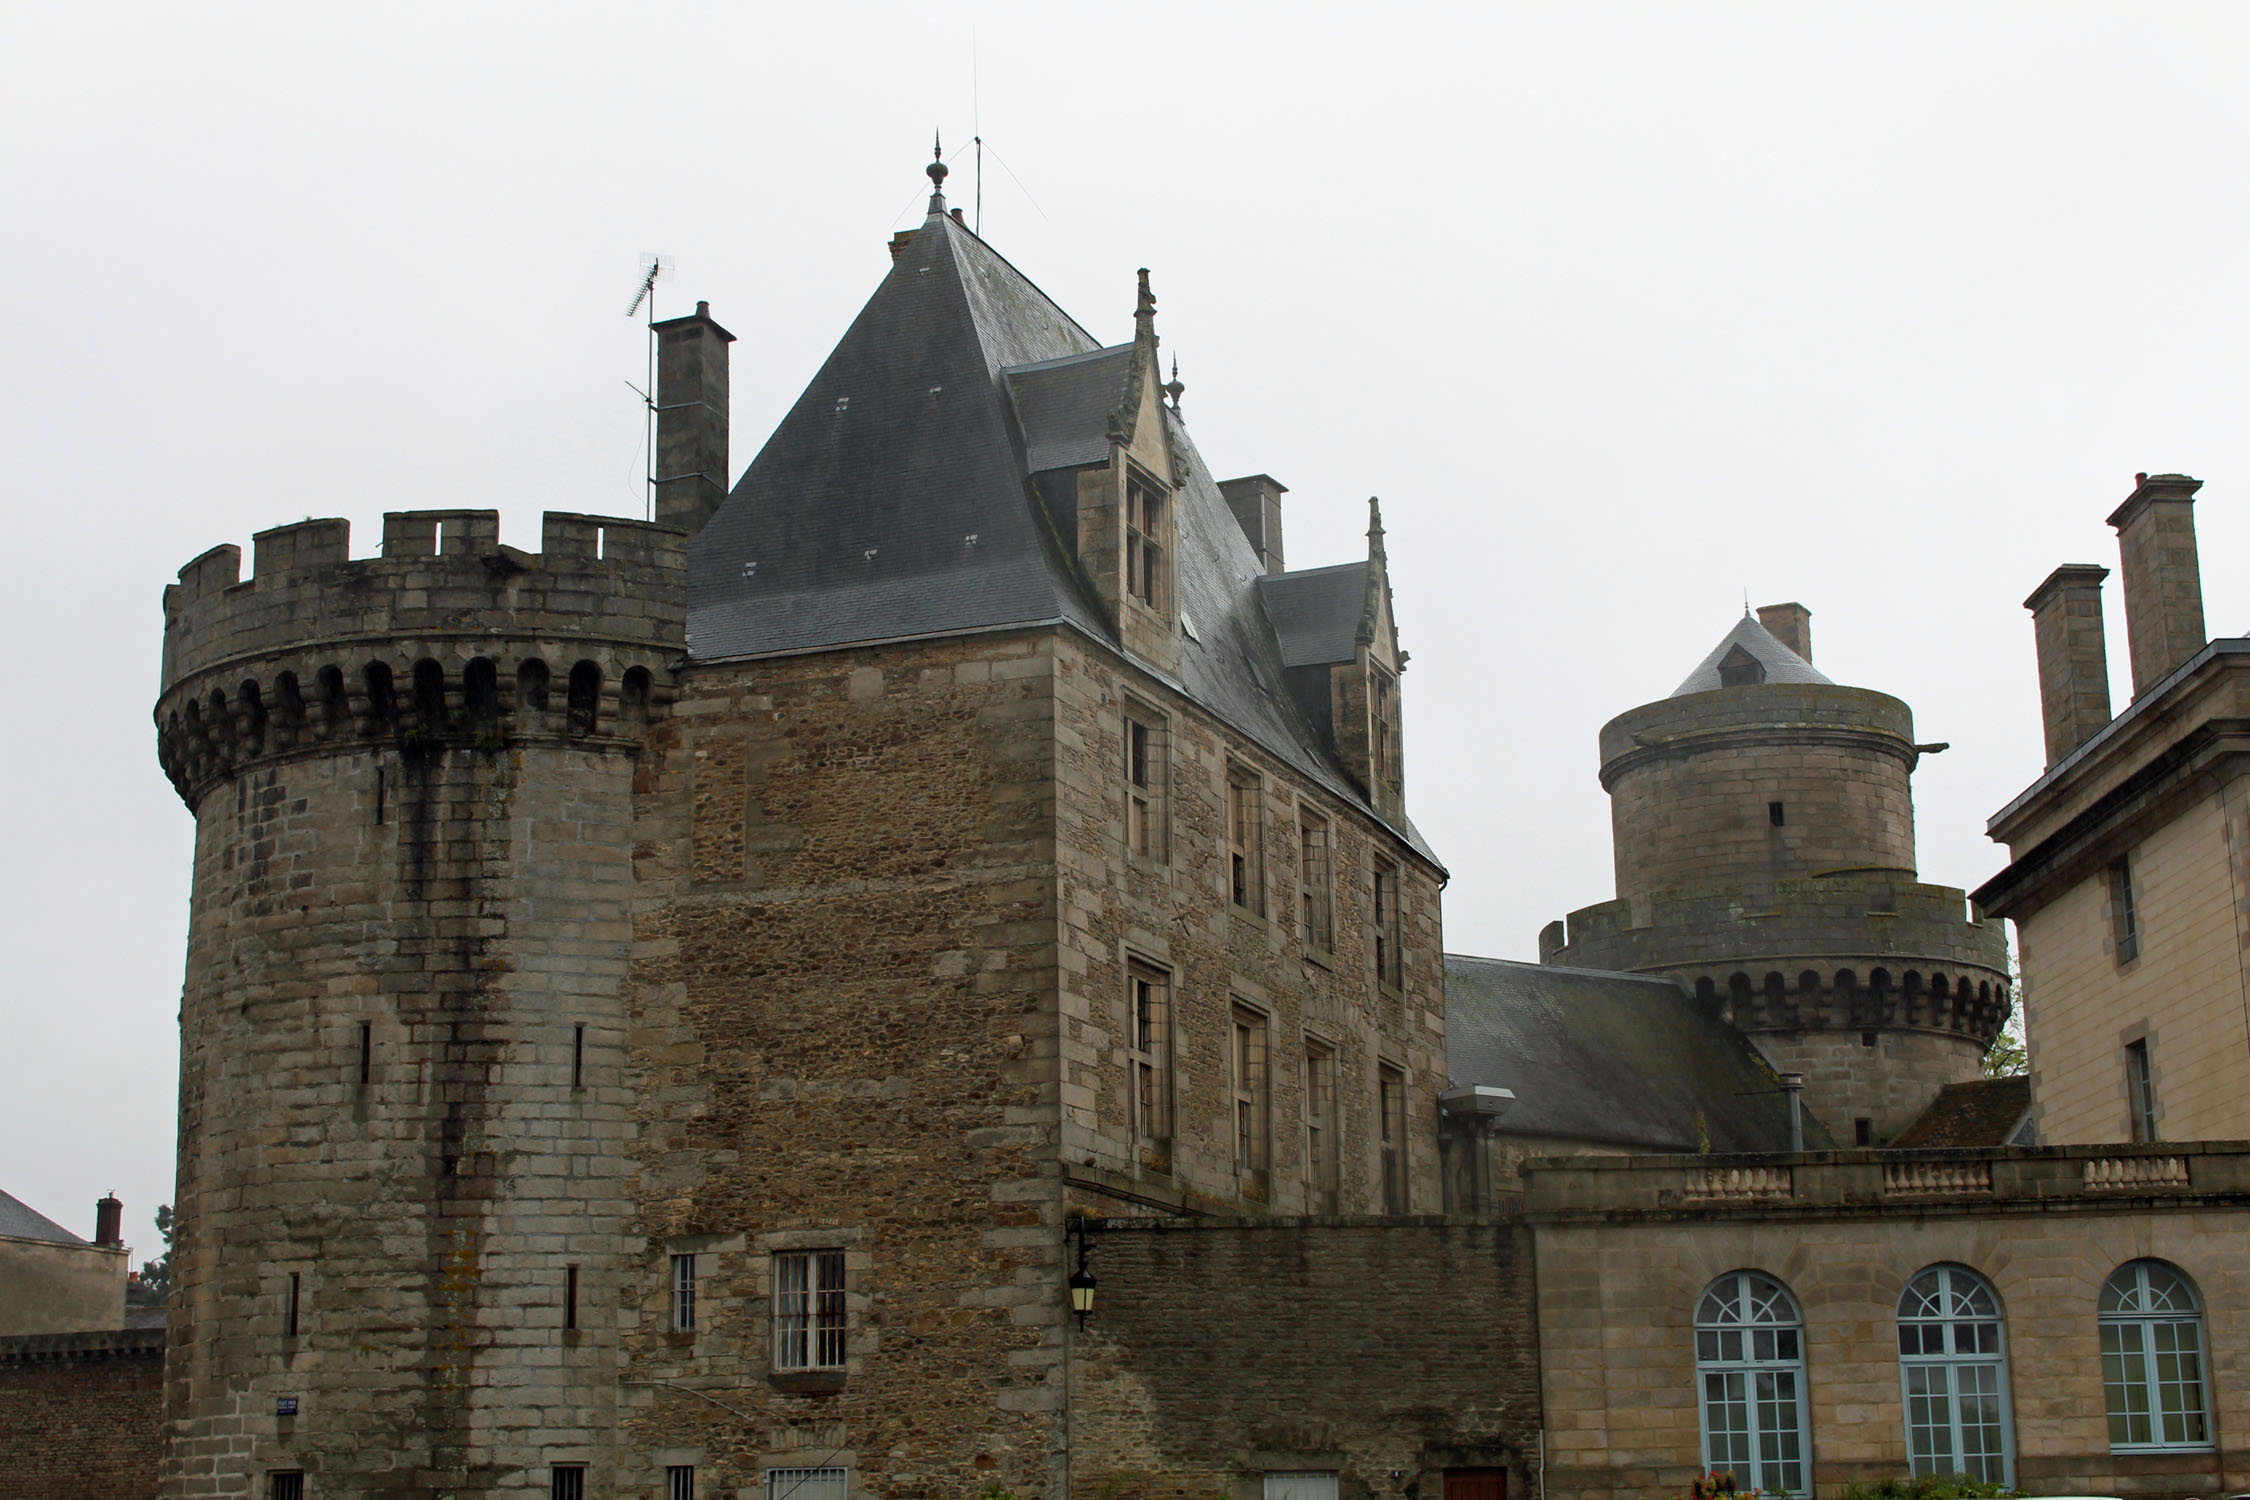 Château d'Alençon